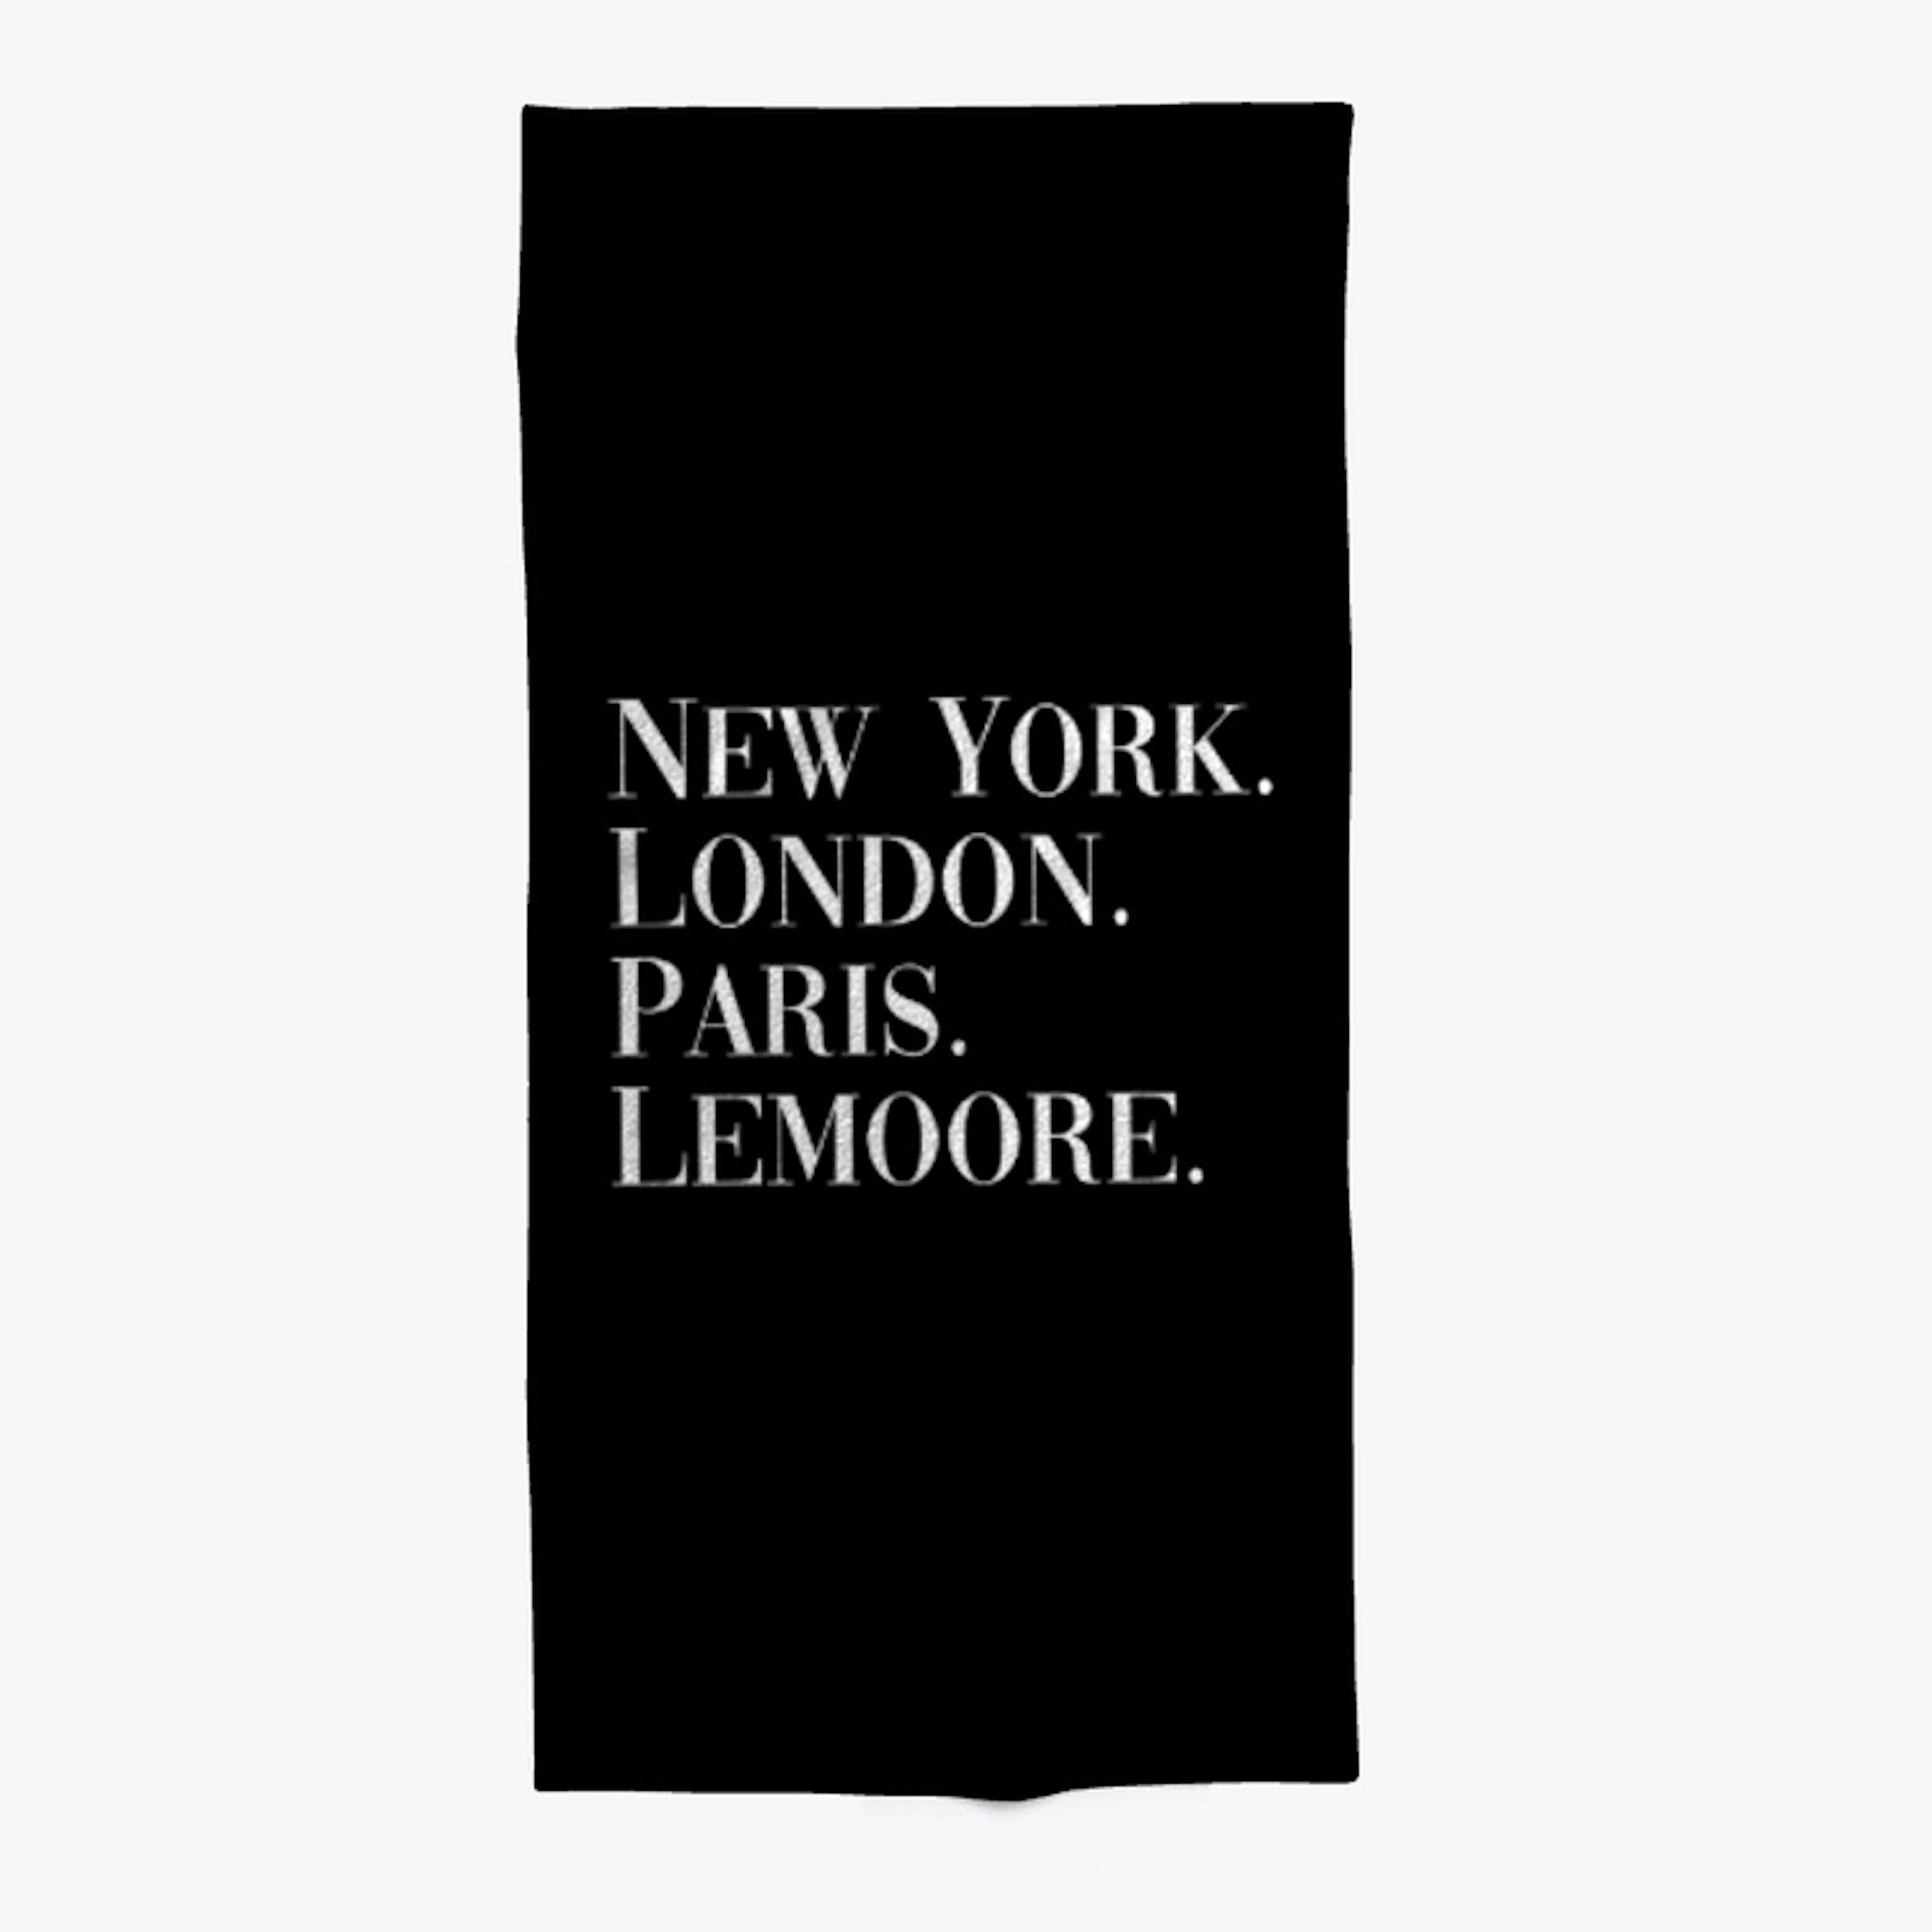 New York. London. Paris. Lemoore.